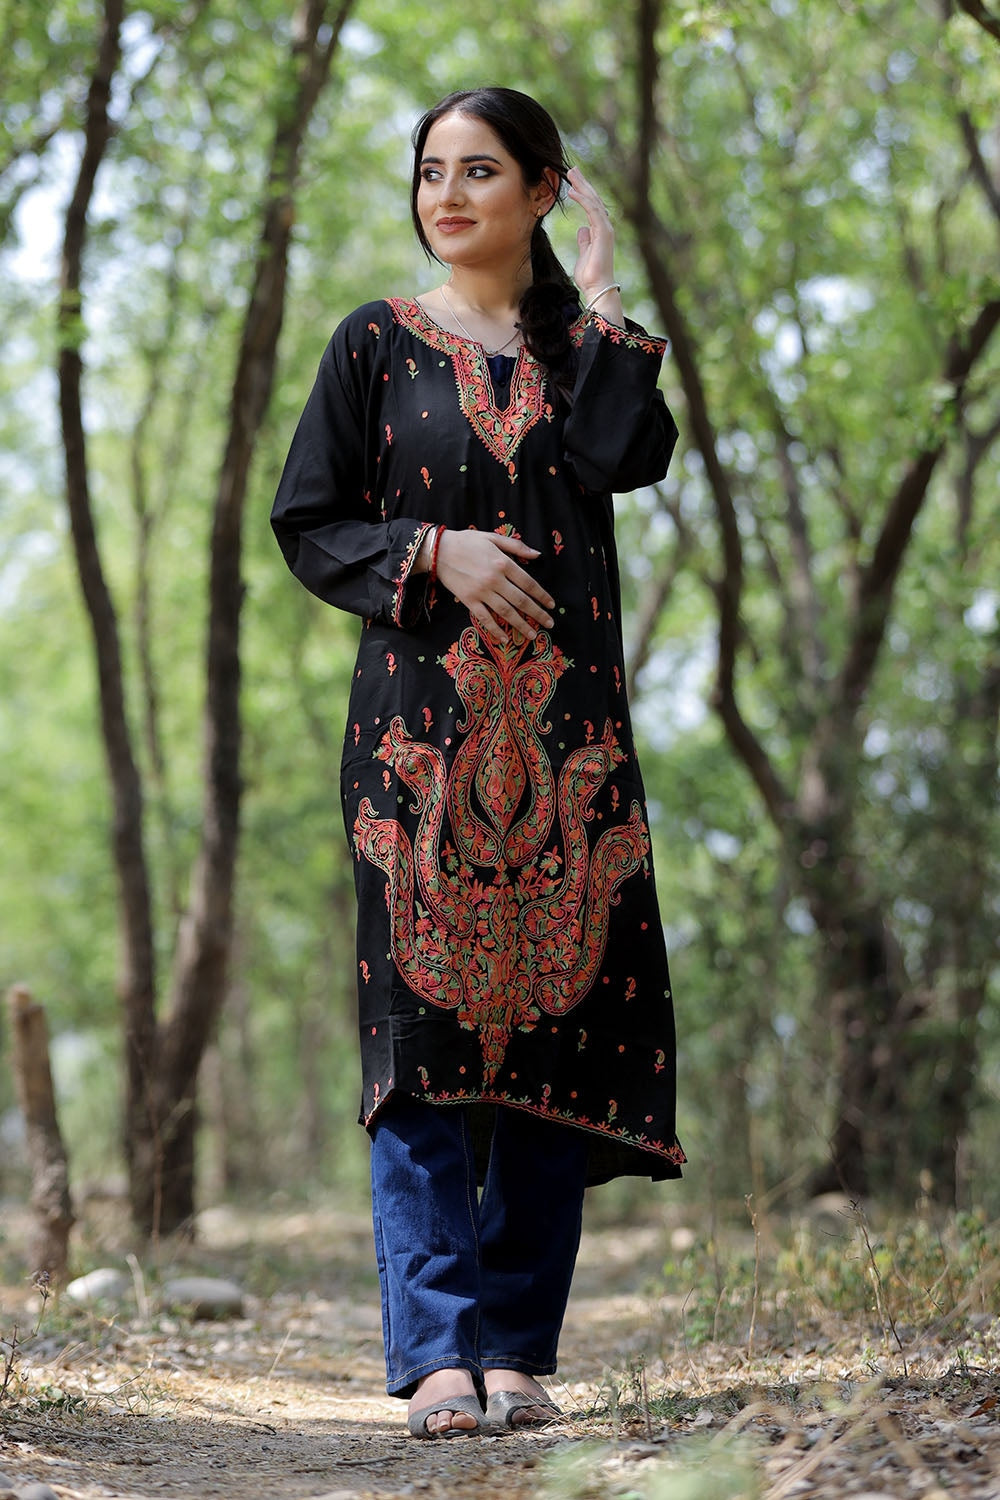 Black Colour Cotton Kurti With Beautifull Kashmiri Embroidery gives